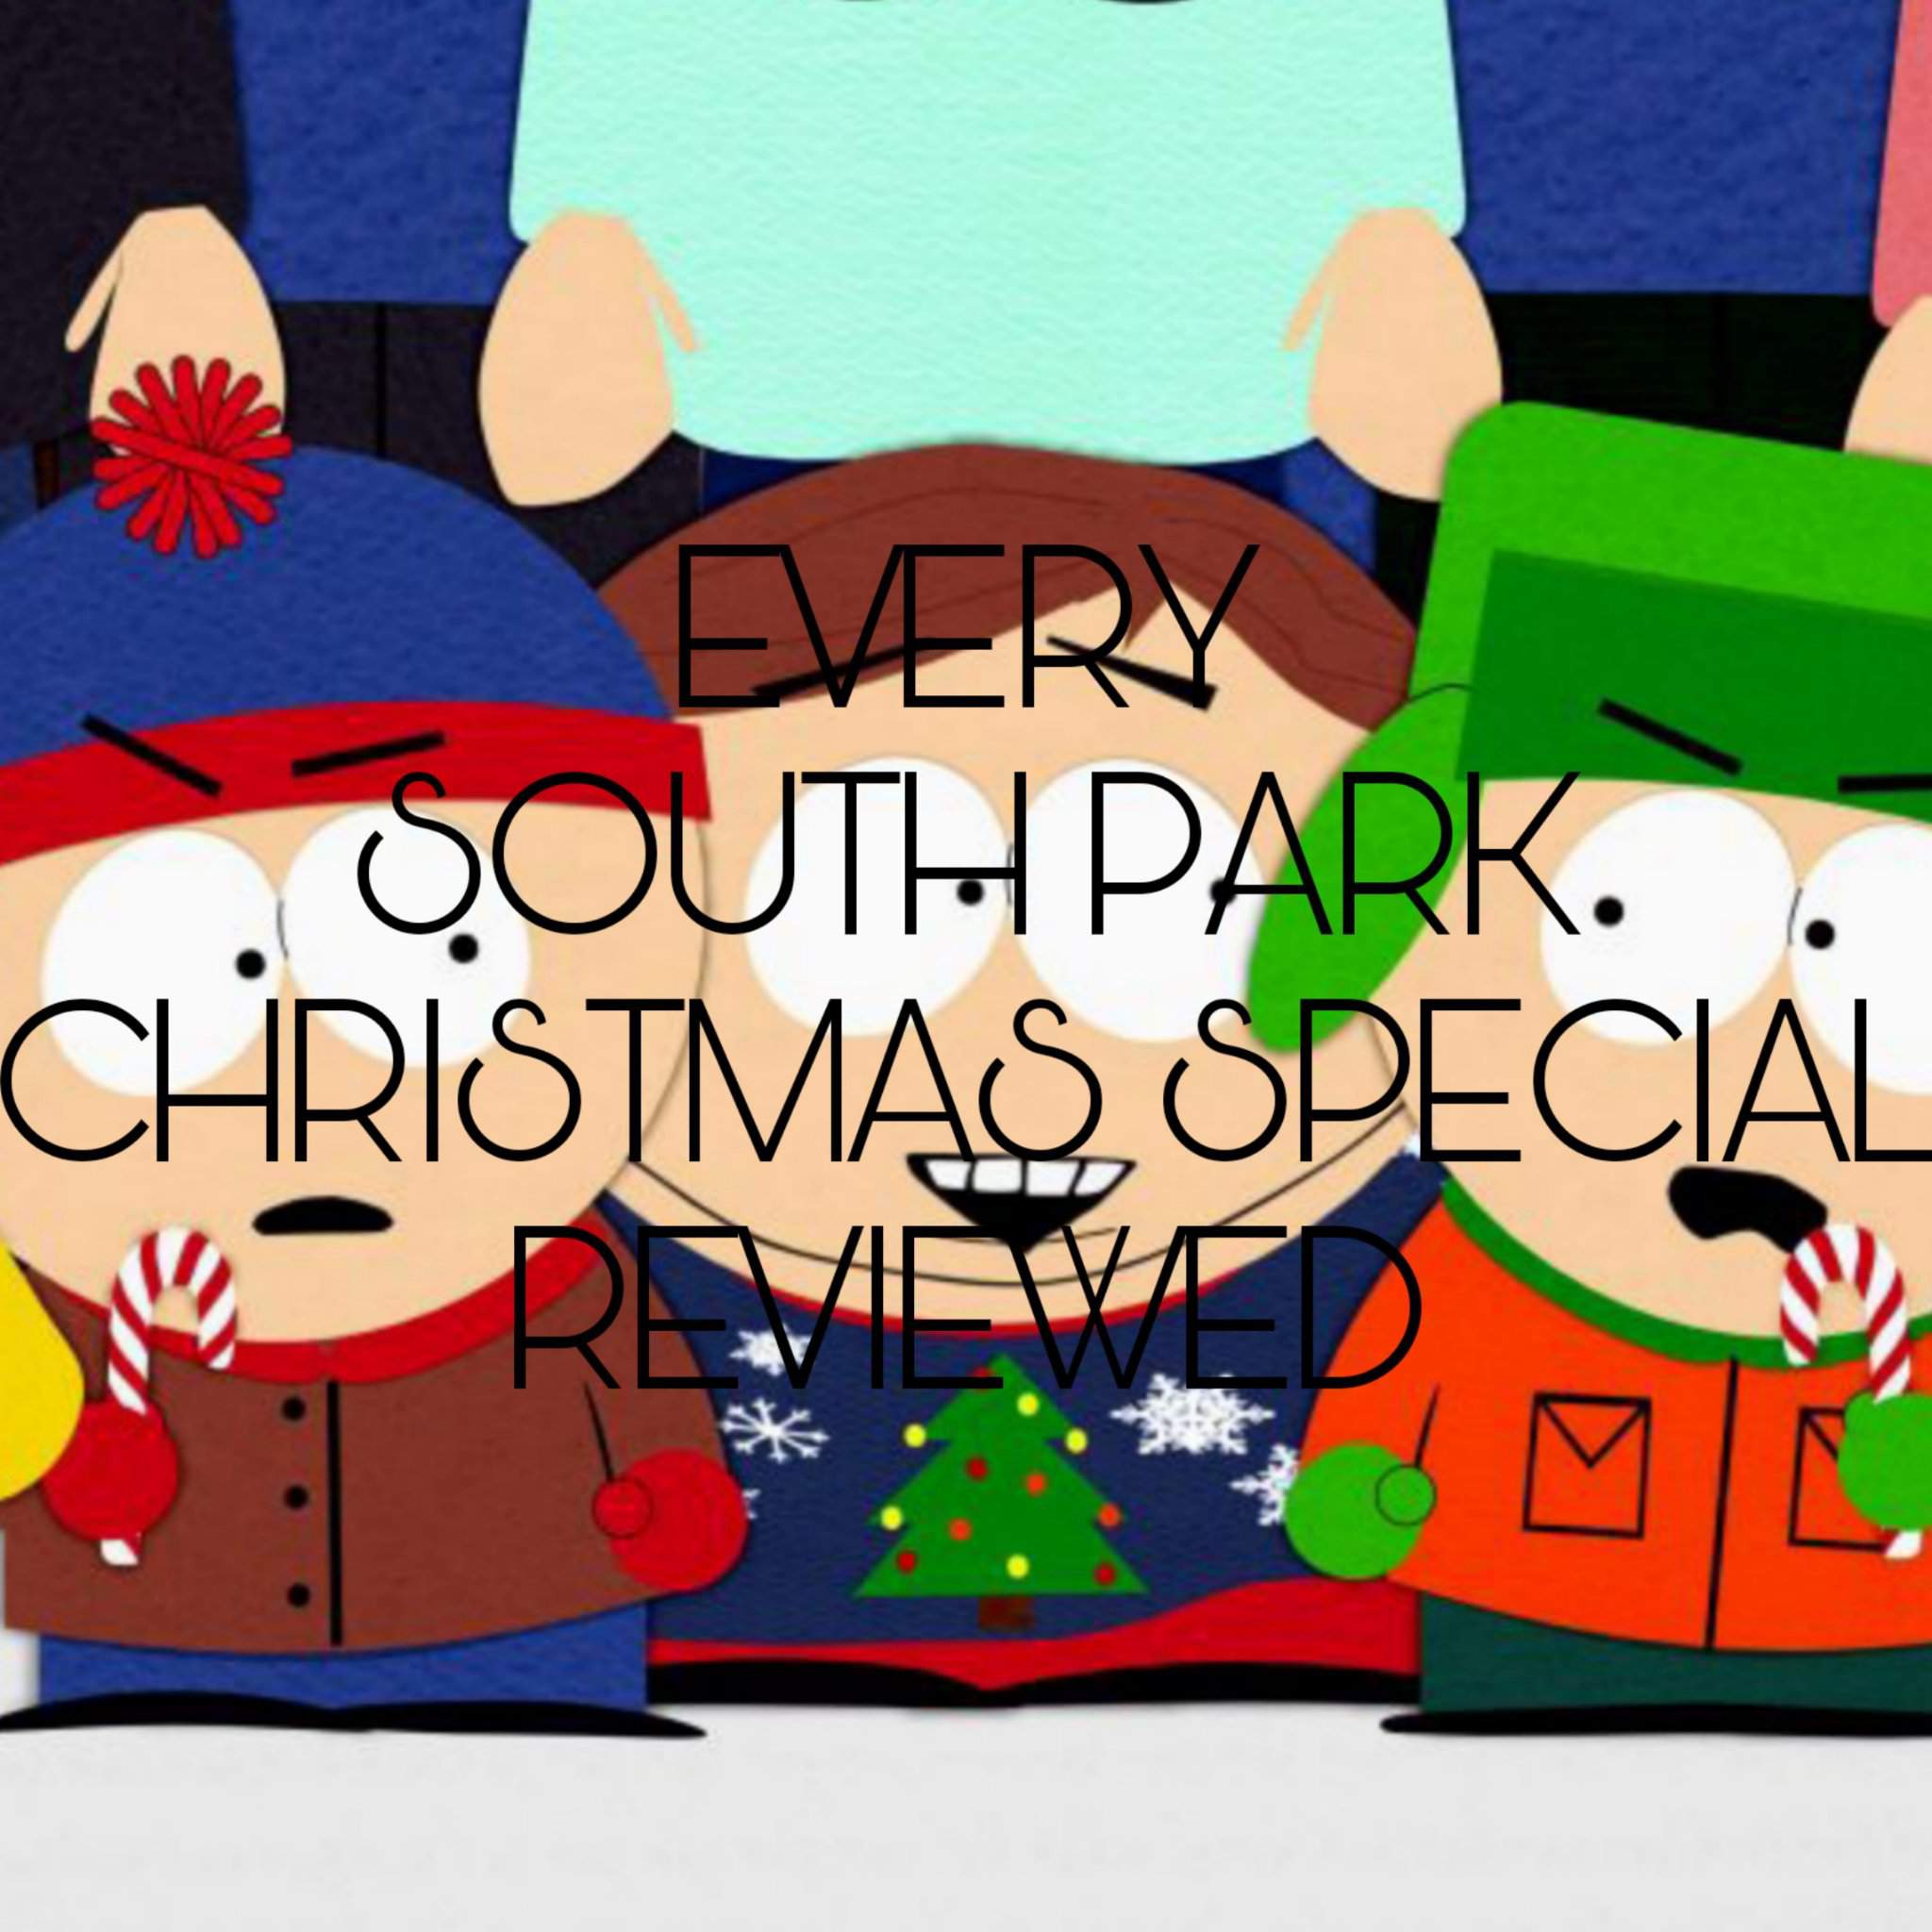 Every South Park Christmas Special Reviewed Cartoon Amino